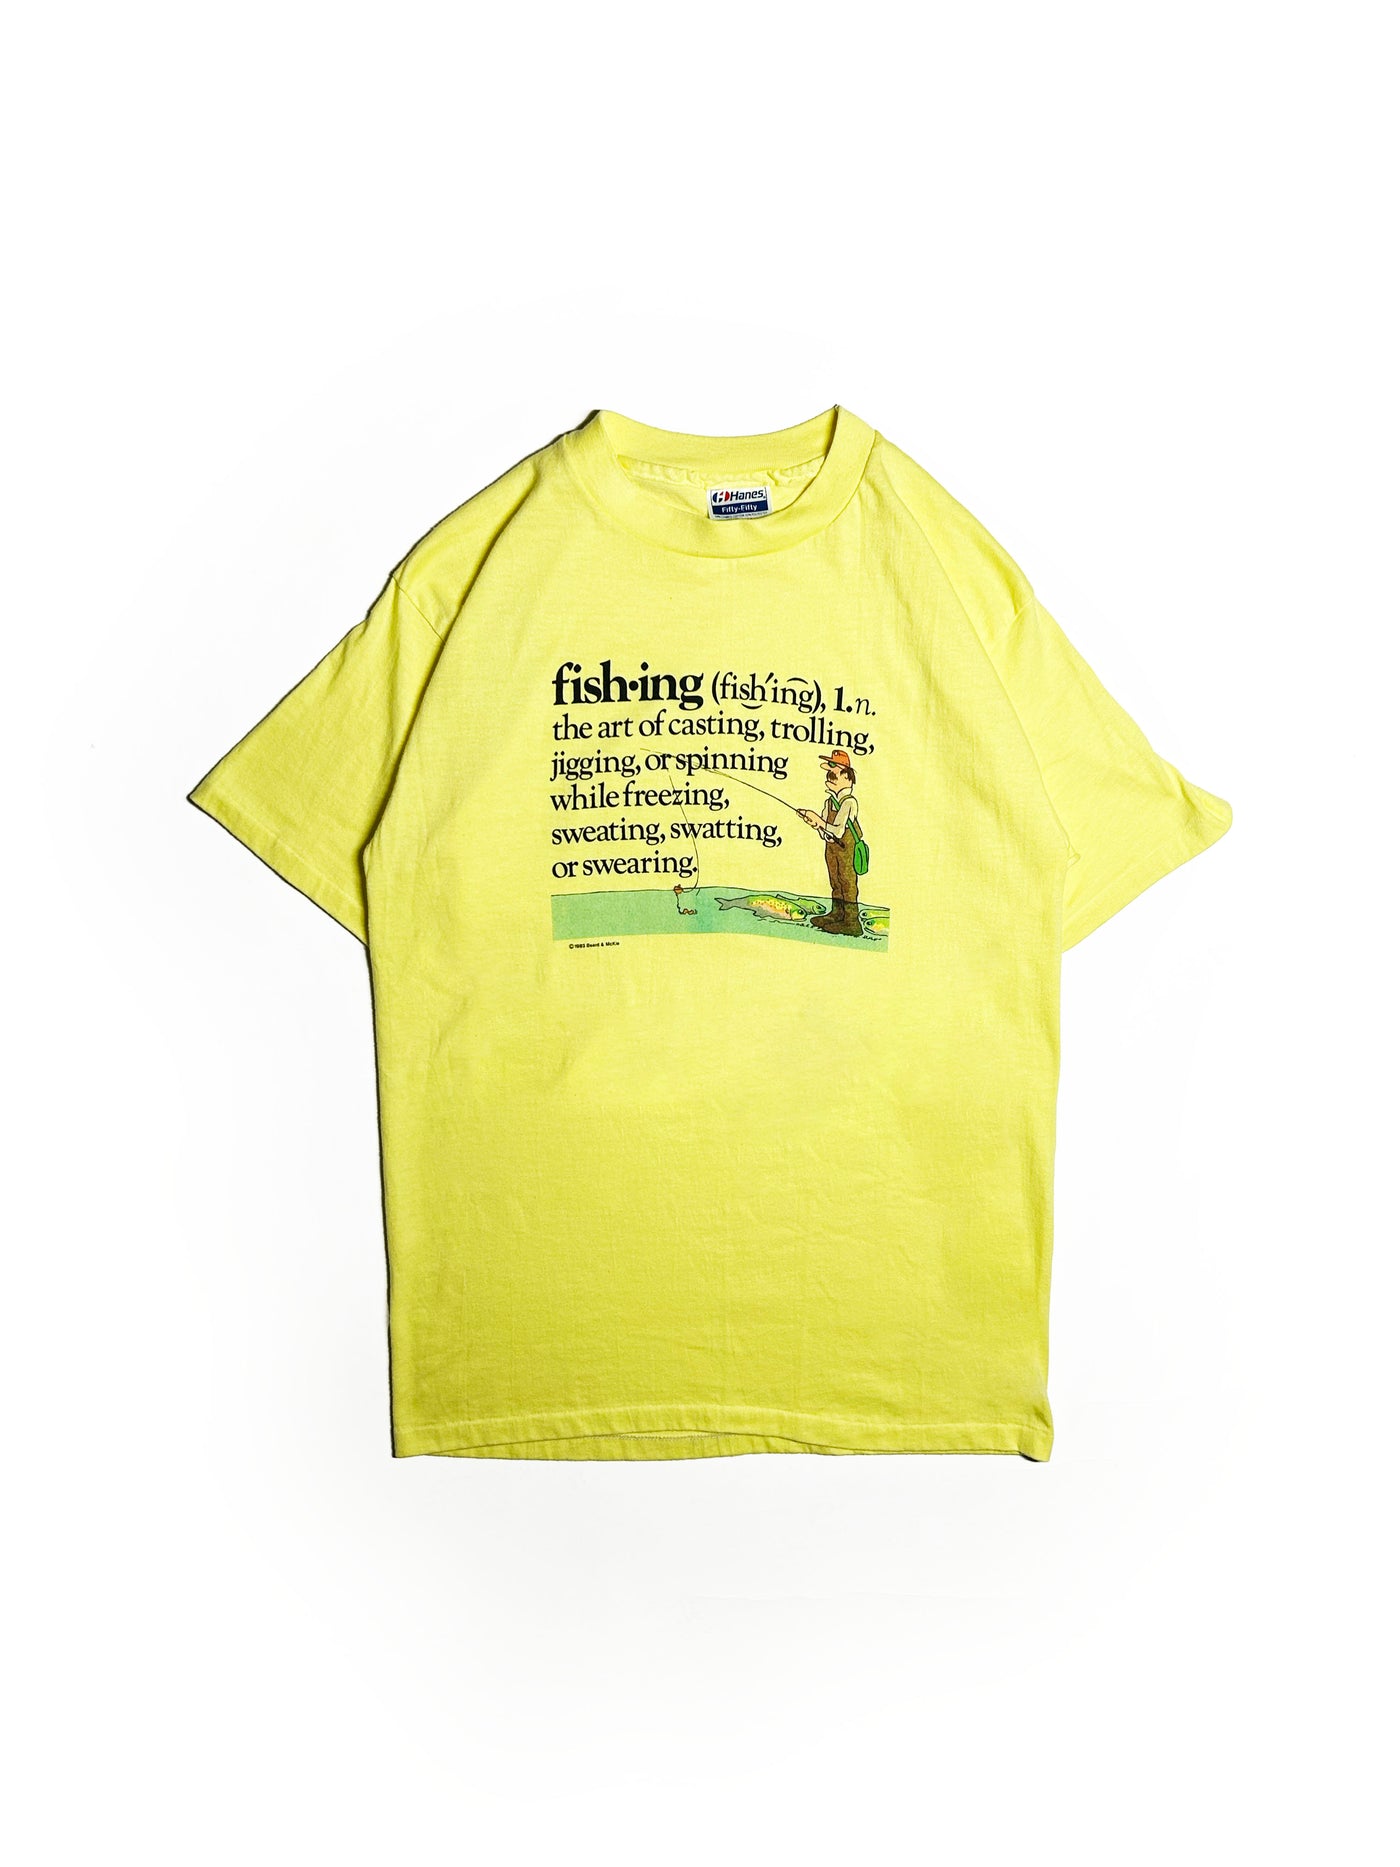 Vintage 1983 Fishing Definition T-Shirt